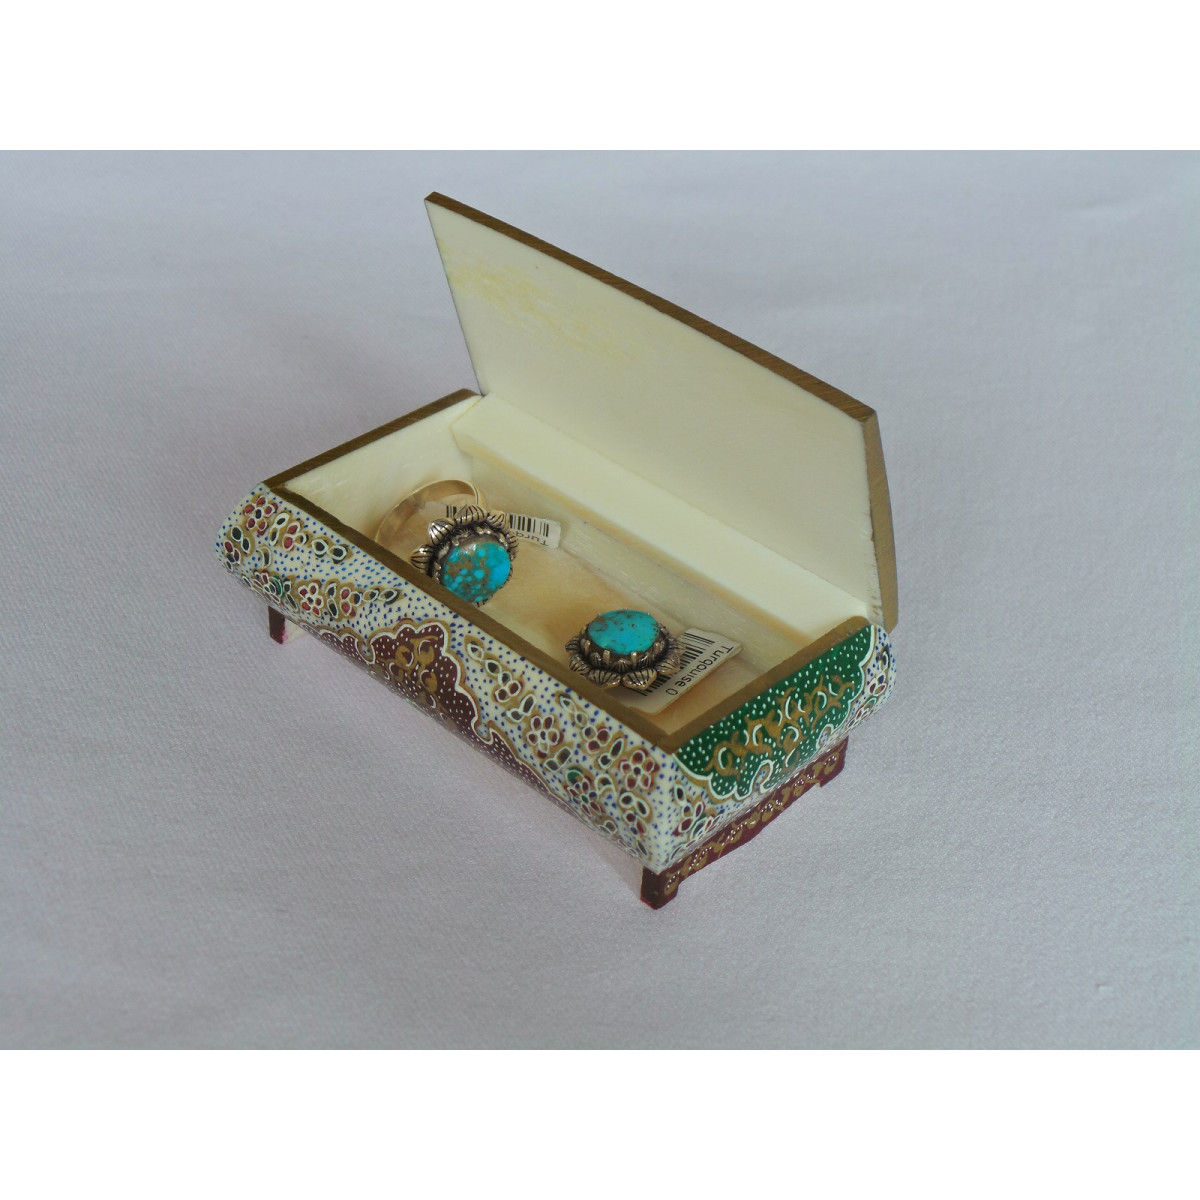 Miniature Hand Painted Jewelry Box - HM1001-Persian Handicrafts